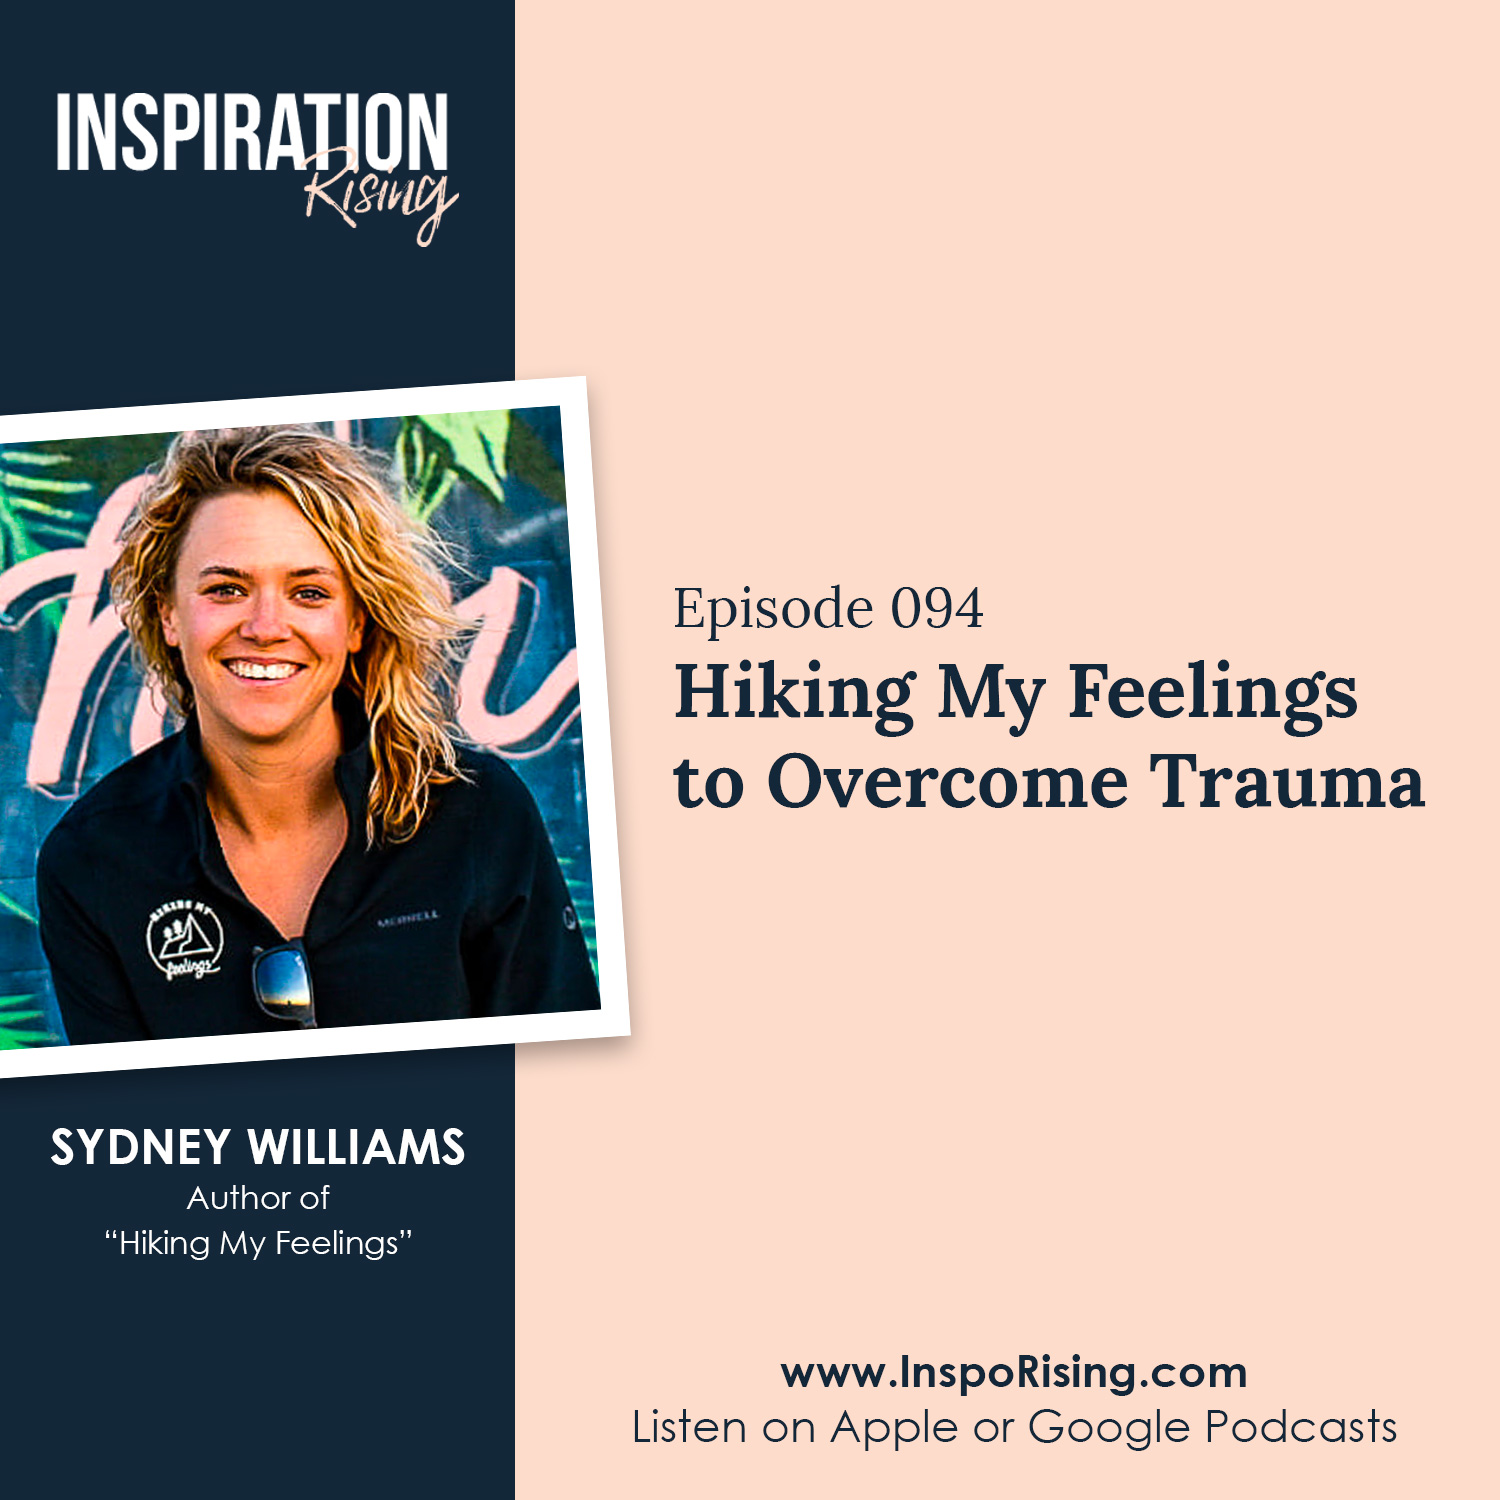 Sydney Williams - Hiking My Feelings